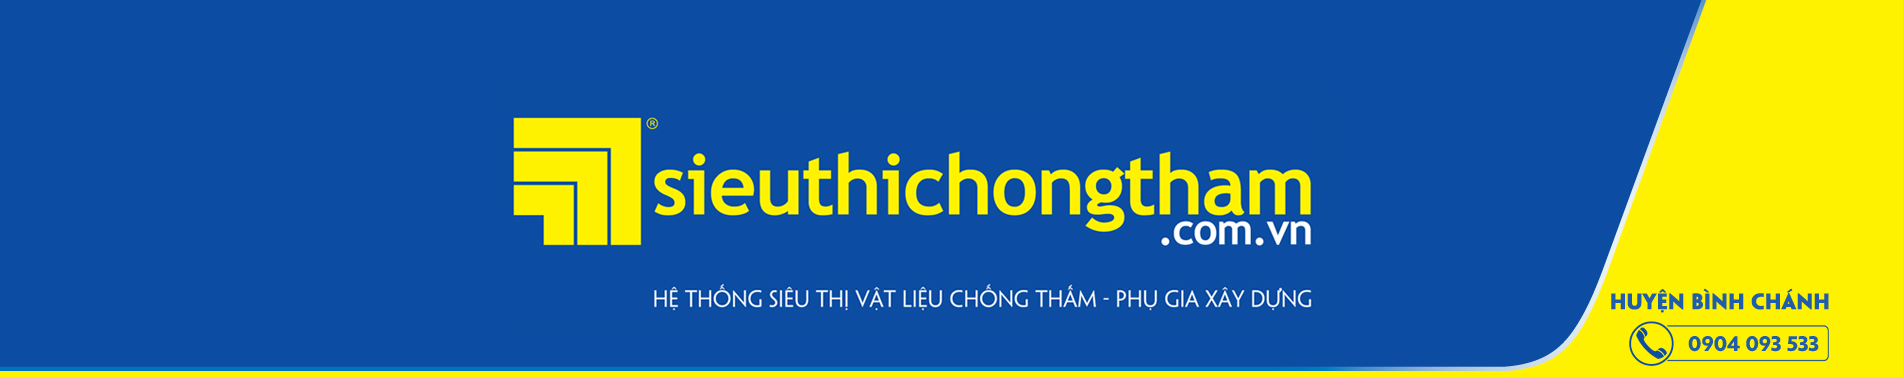 Huyen Binh Chanh Banner 1